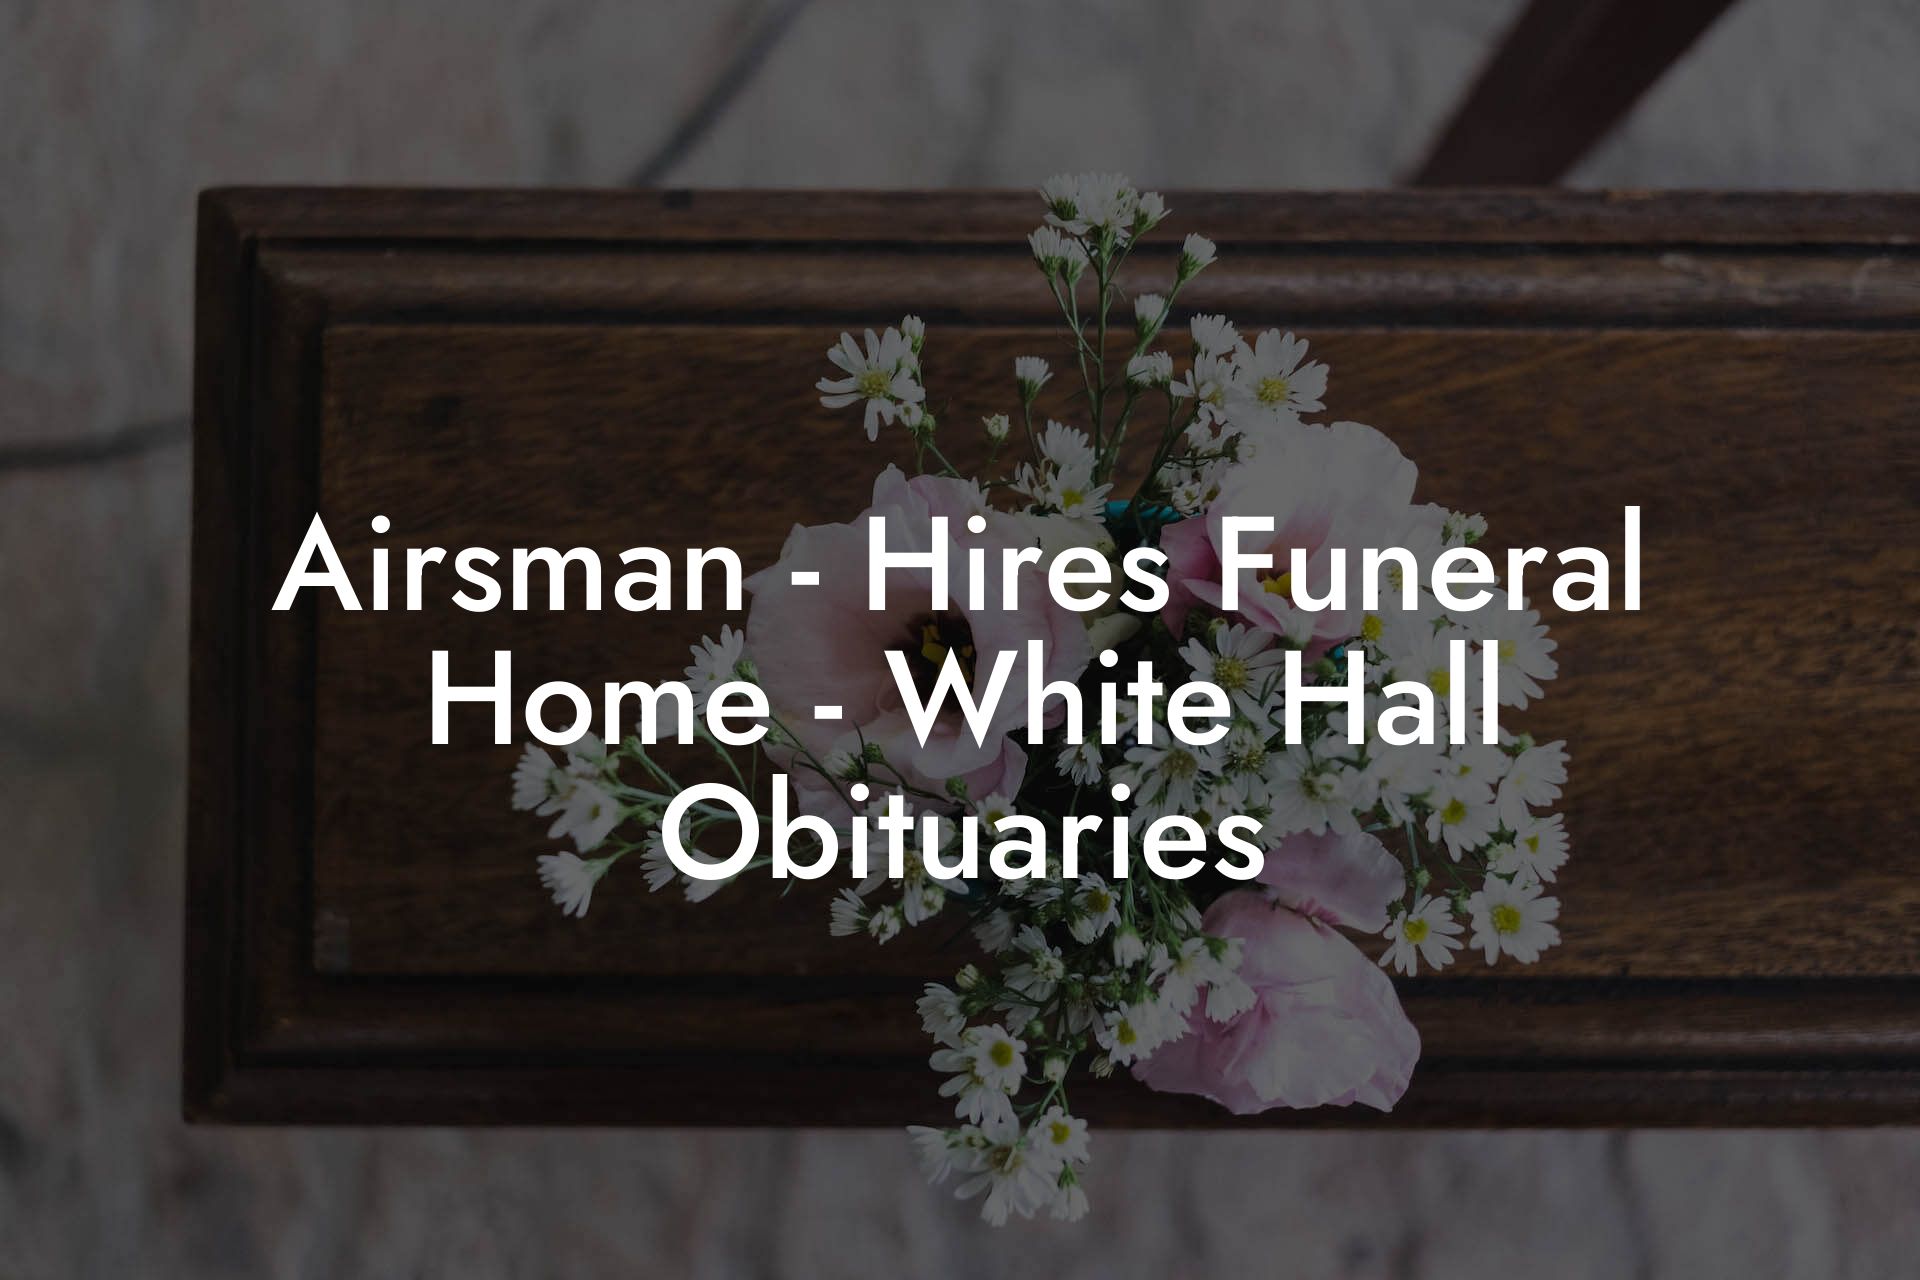 Airsman - Hires Funeral Home - White Hall Obituaries